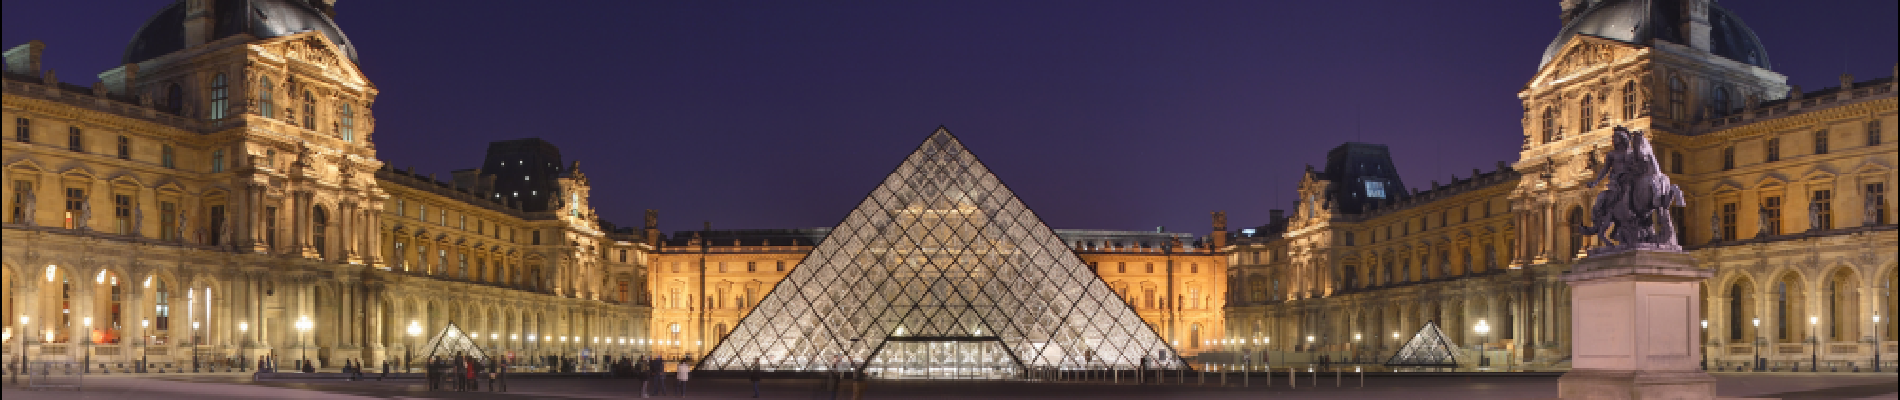 Punto di interesse Parigi - Pyramide du Louvre - Photo